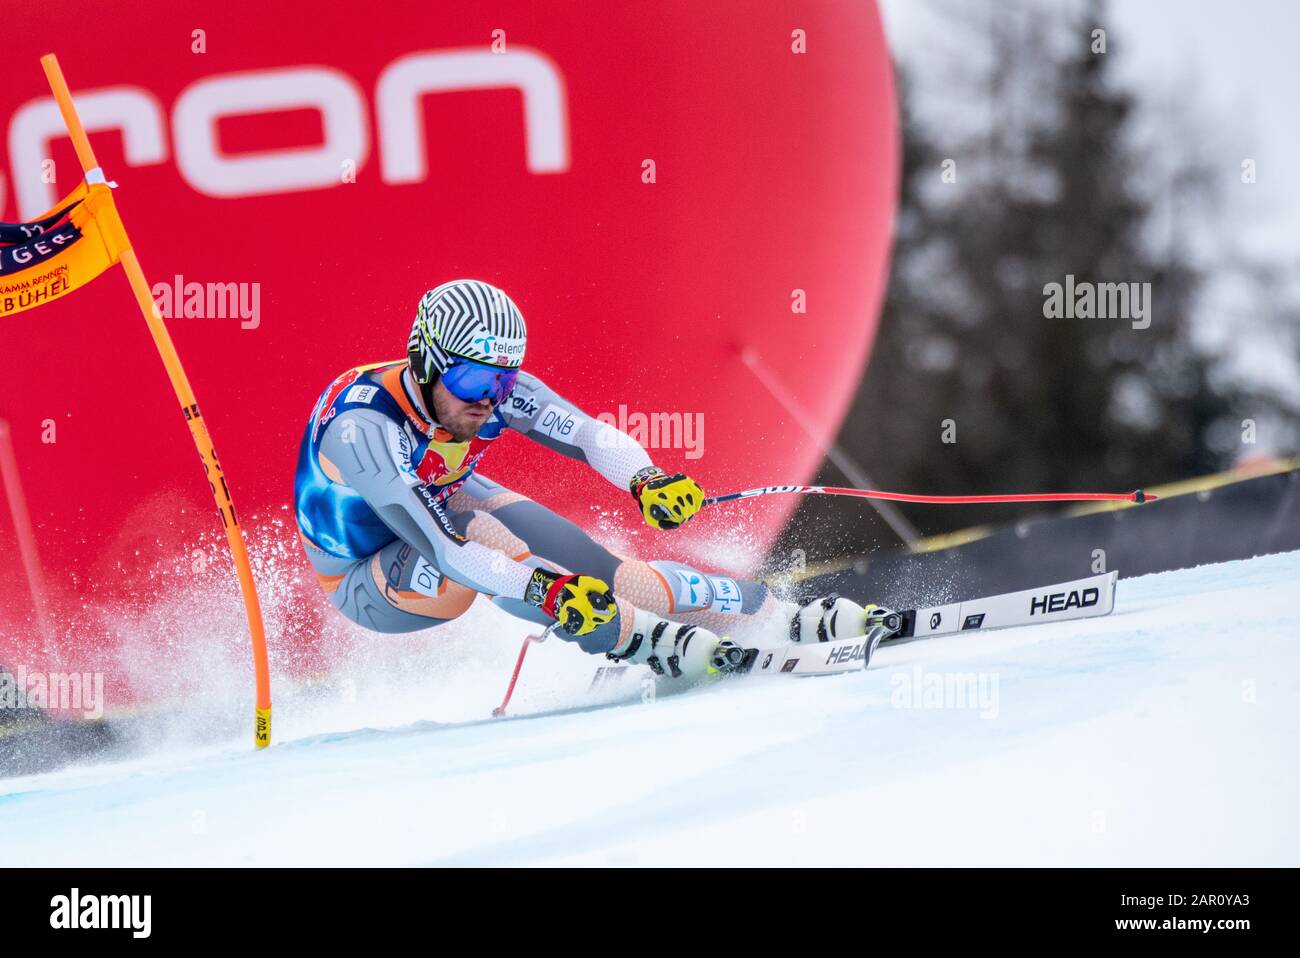 Kjetil Jansrud of Norway at the Ski Alpin: 80. Hahnenkamm Race 2020 - Audi FIS Alpine Ski World Cup - Men's Downhill at the Streif on January 25, 2020 in Kitzbuehel, AUSTRIA. Credit: European Sports Photographic Agency/Alamy Live News Stock Photo